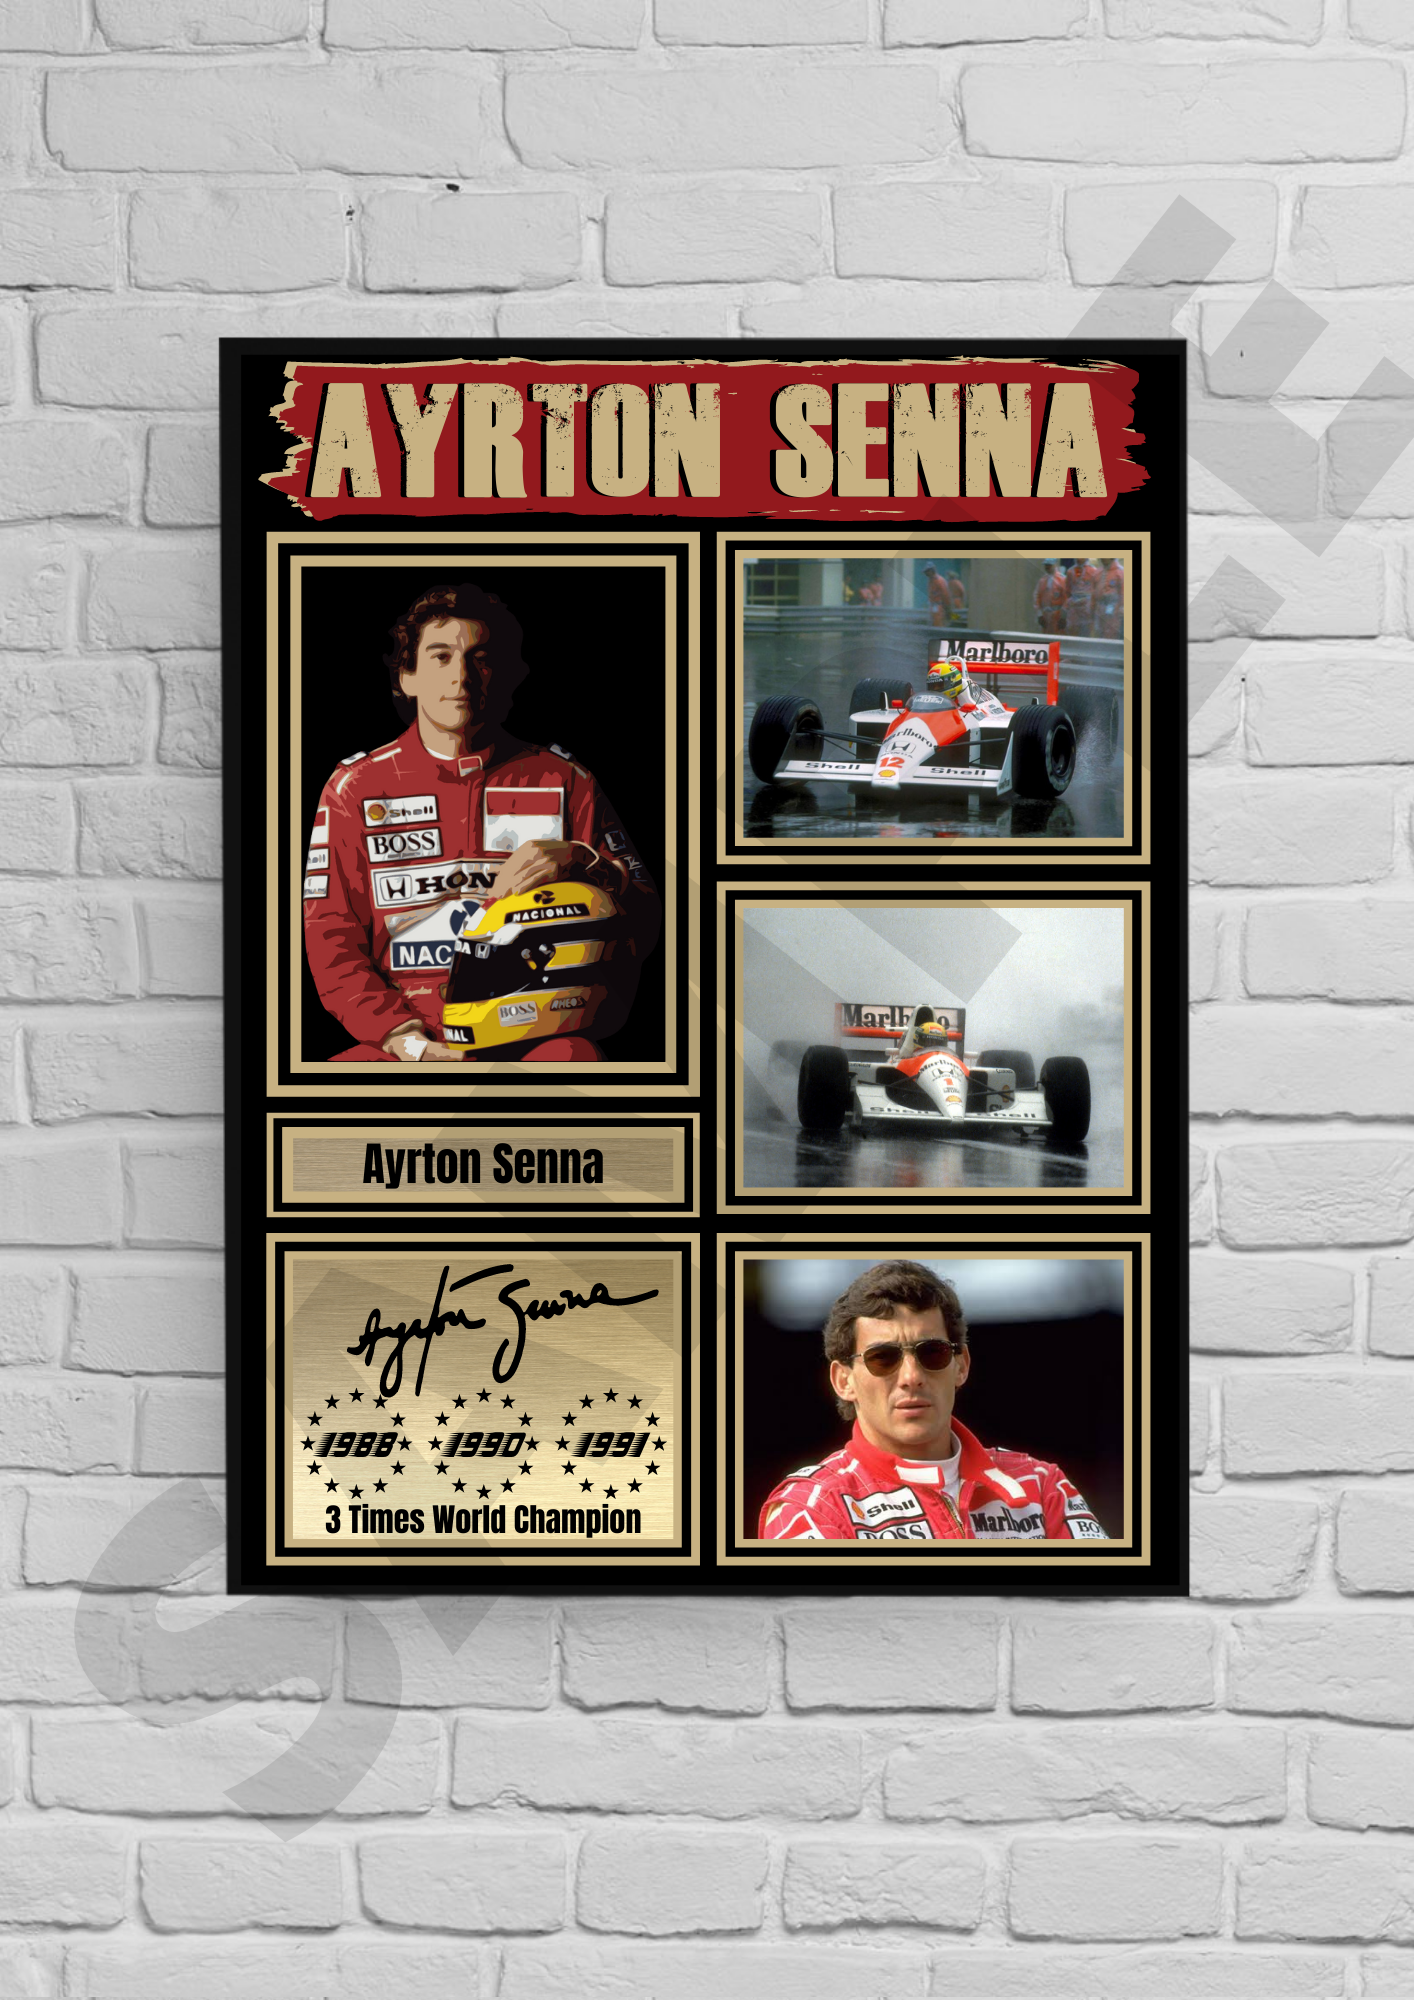 Ayrton Senna (Formula 1) #23 - Signed print